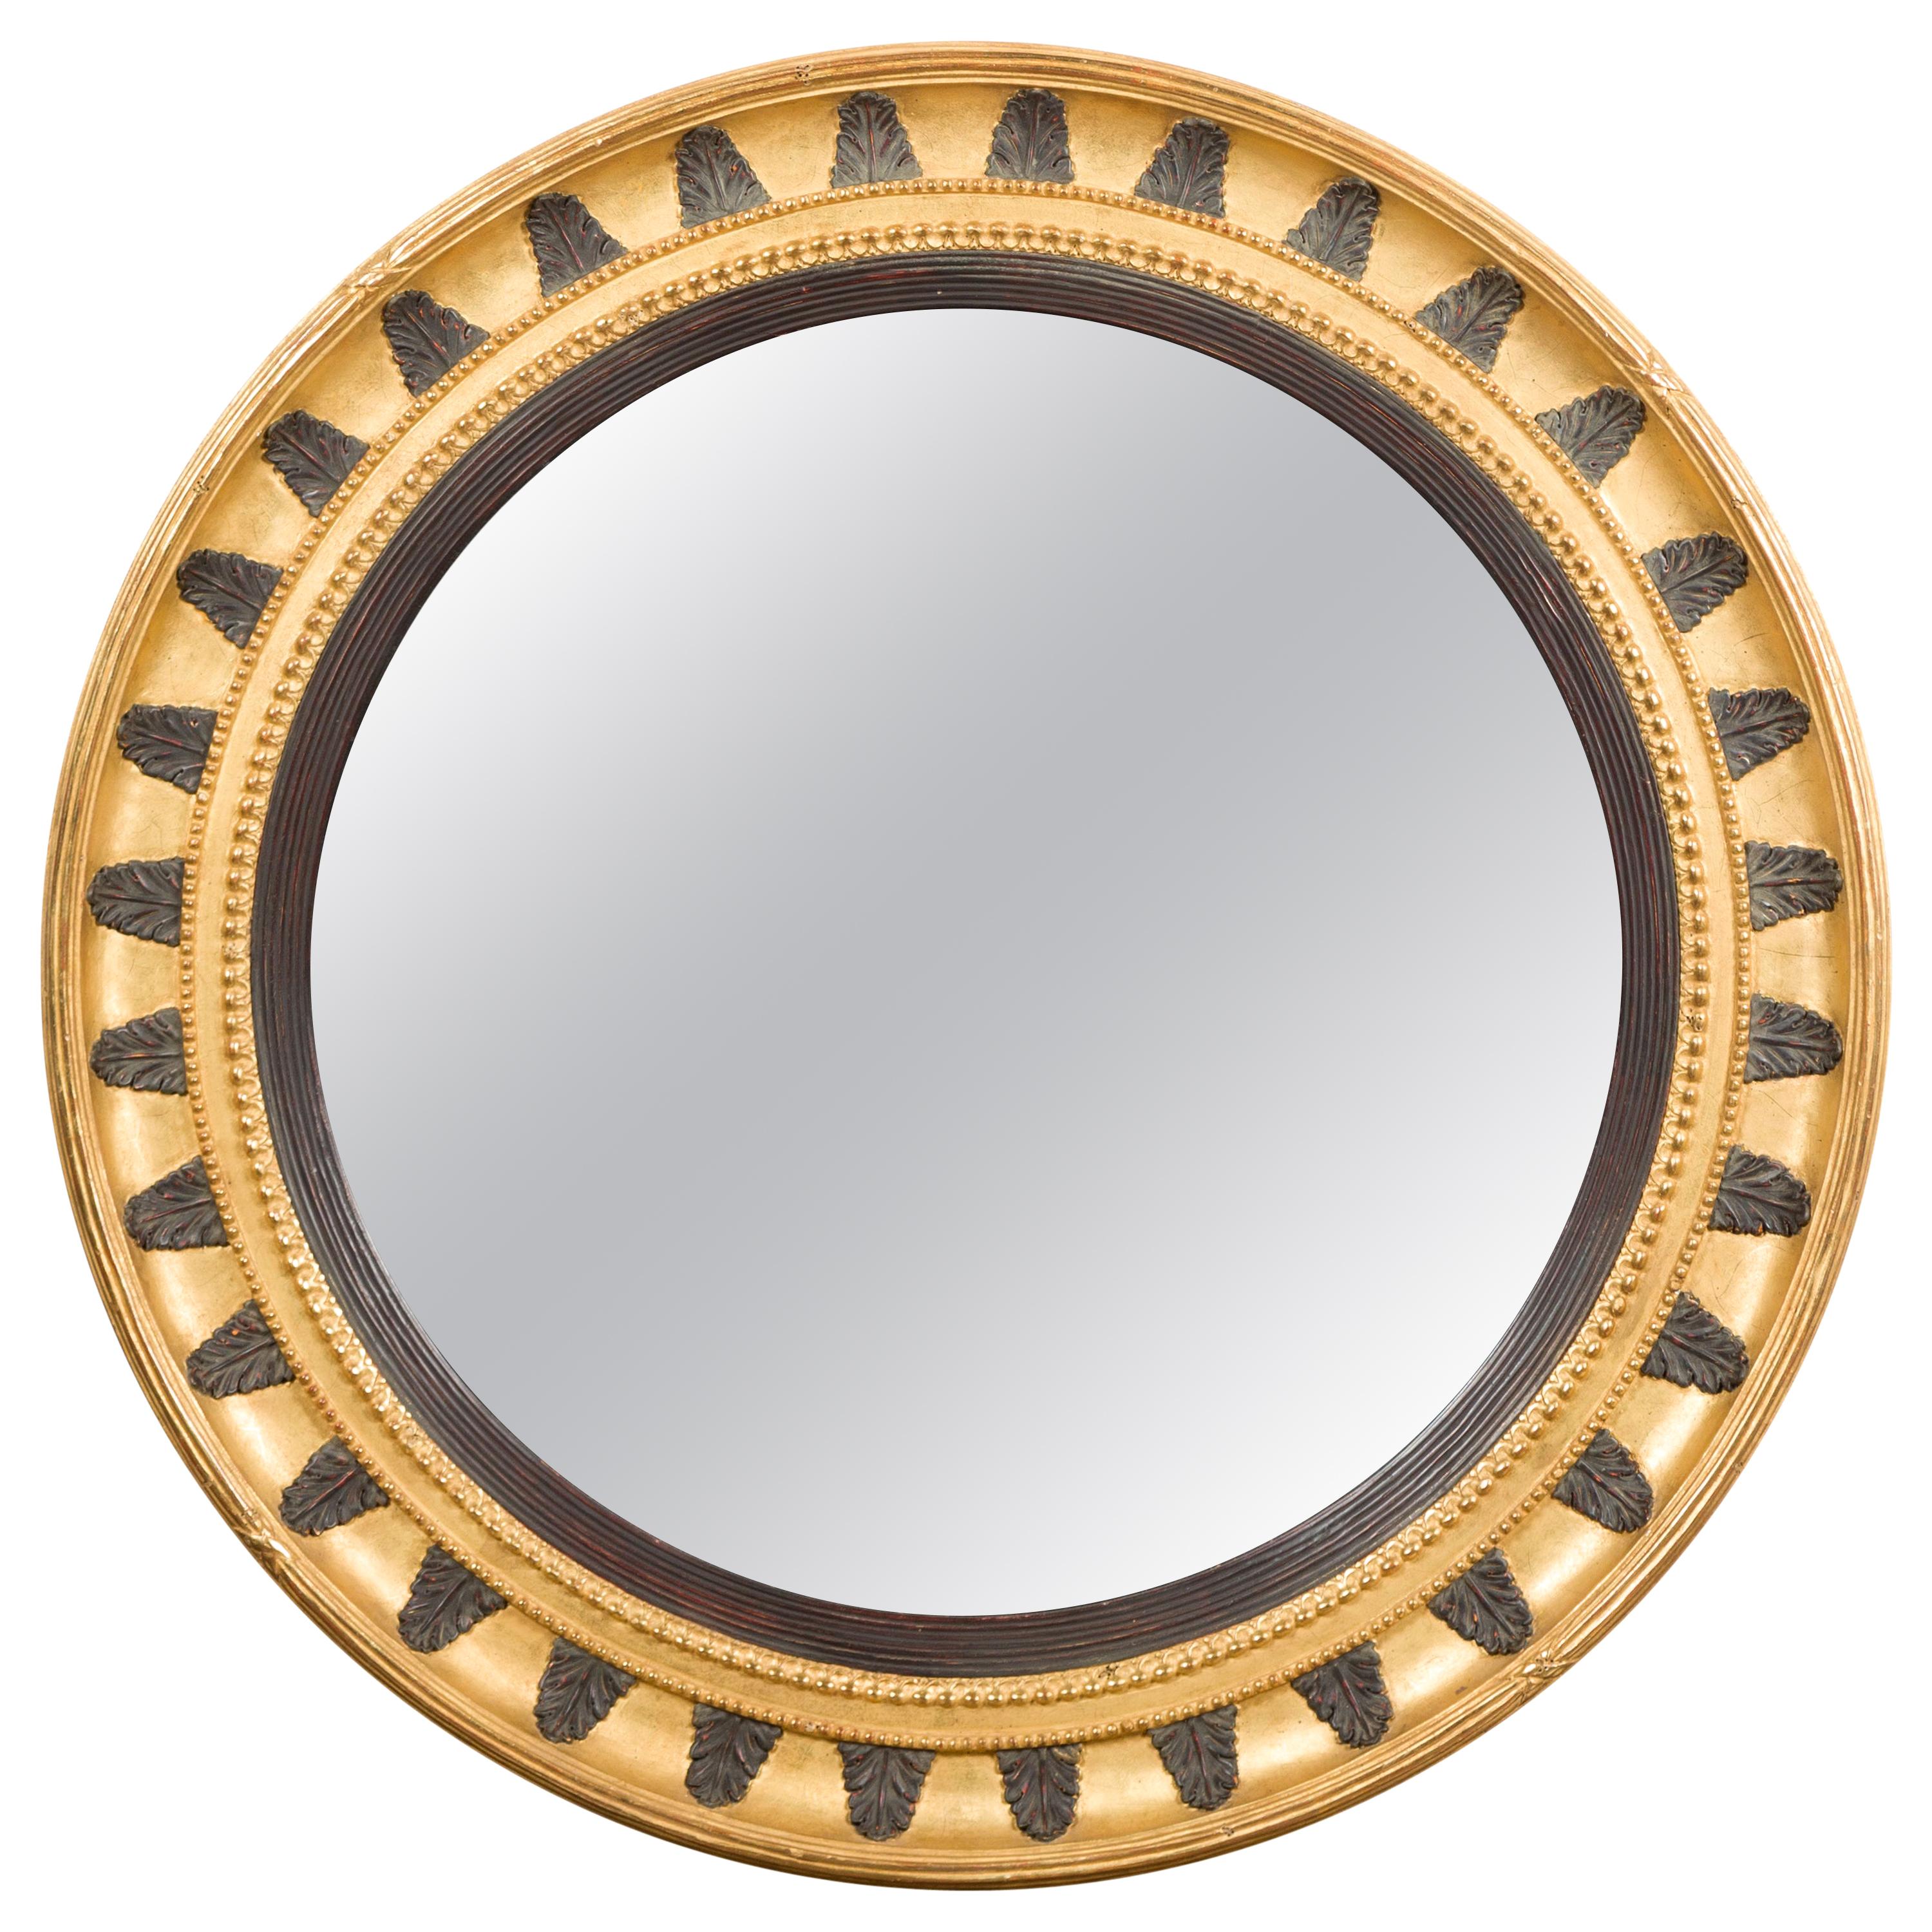 English Midcentury Bullseye Convex Mirror with Gilded Frame and Ebonized Leaves